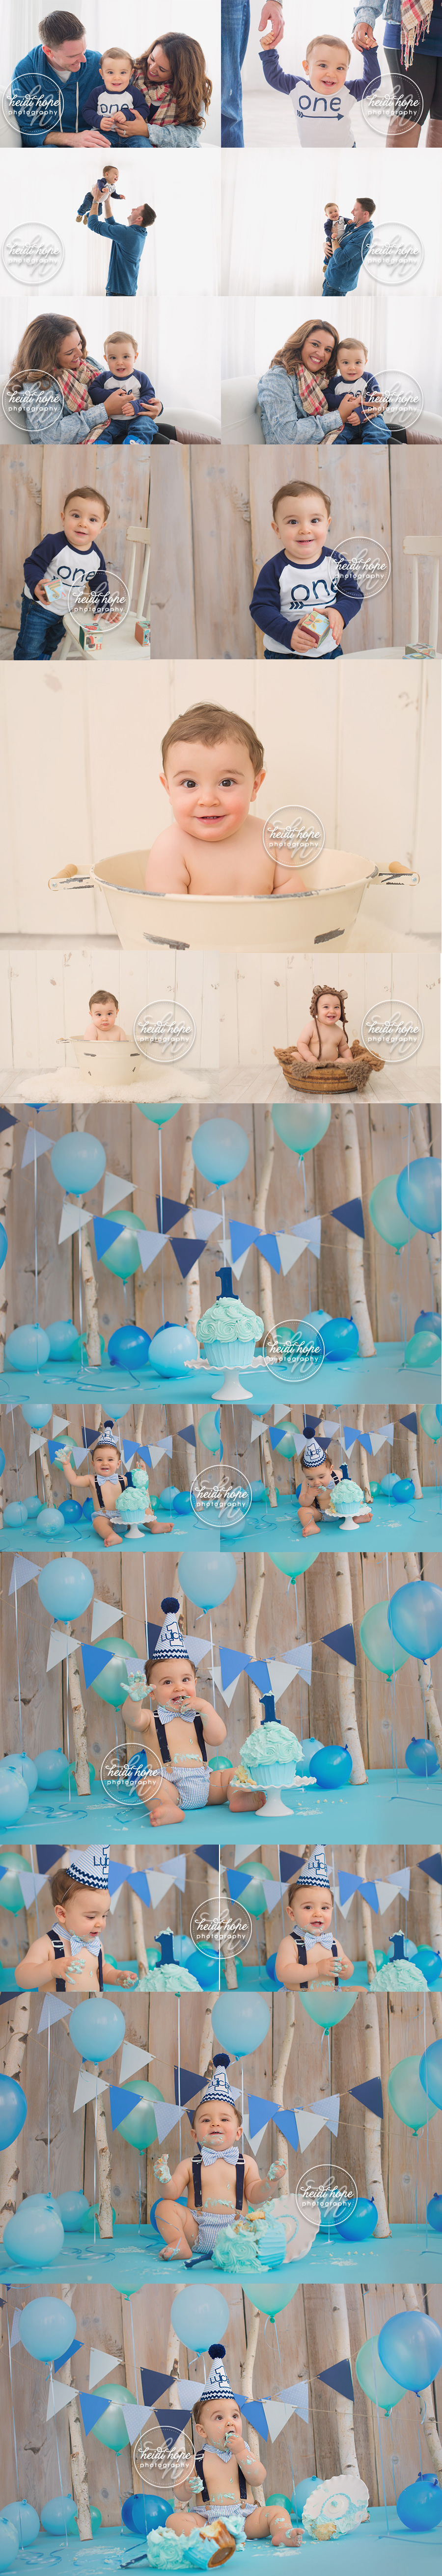 classic-baby-boy-birthday-cakesmash-portraits-with-blue-ballons